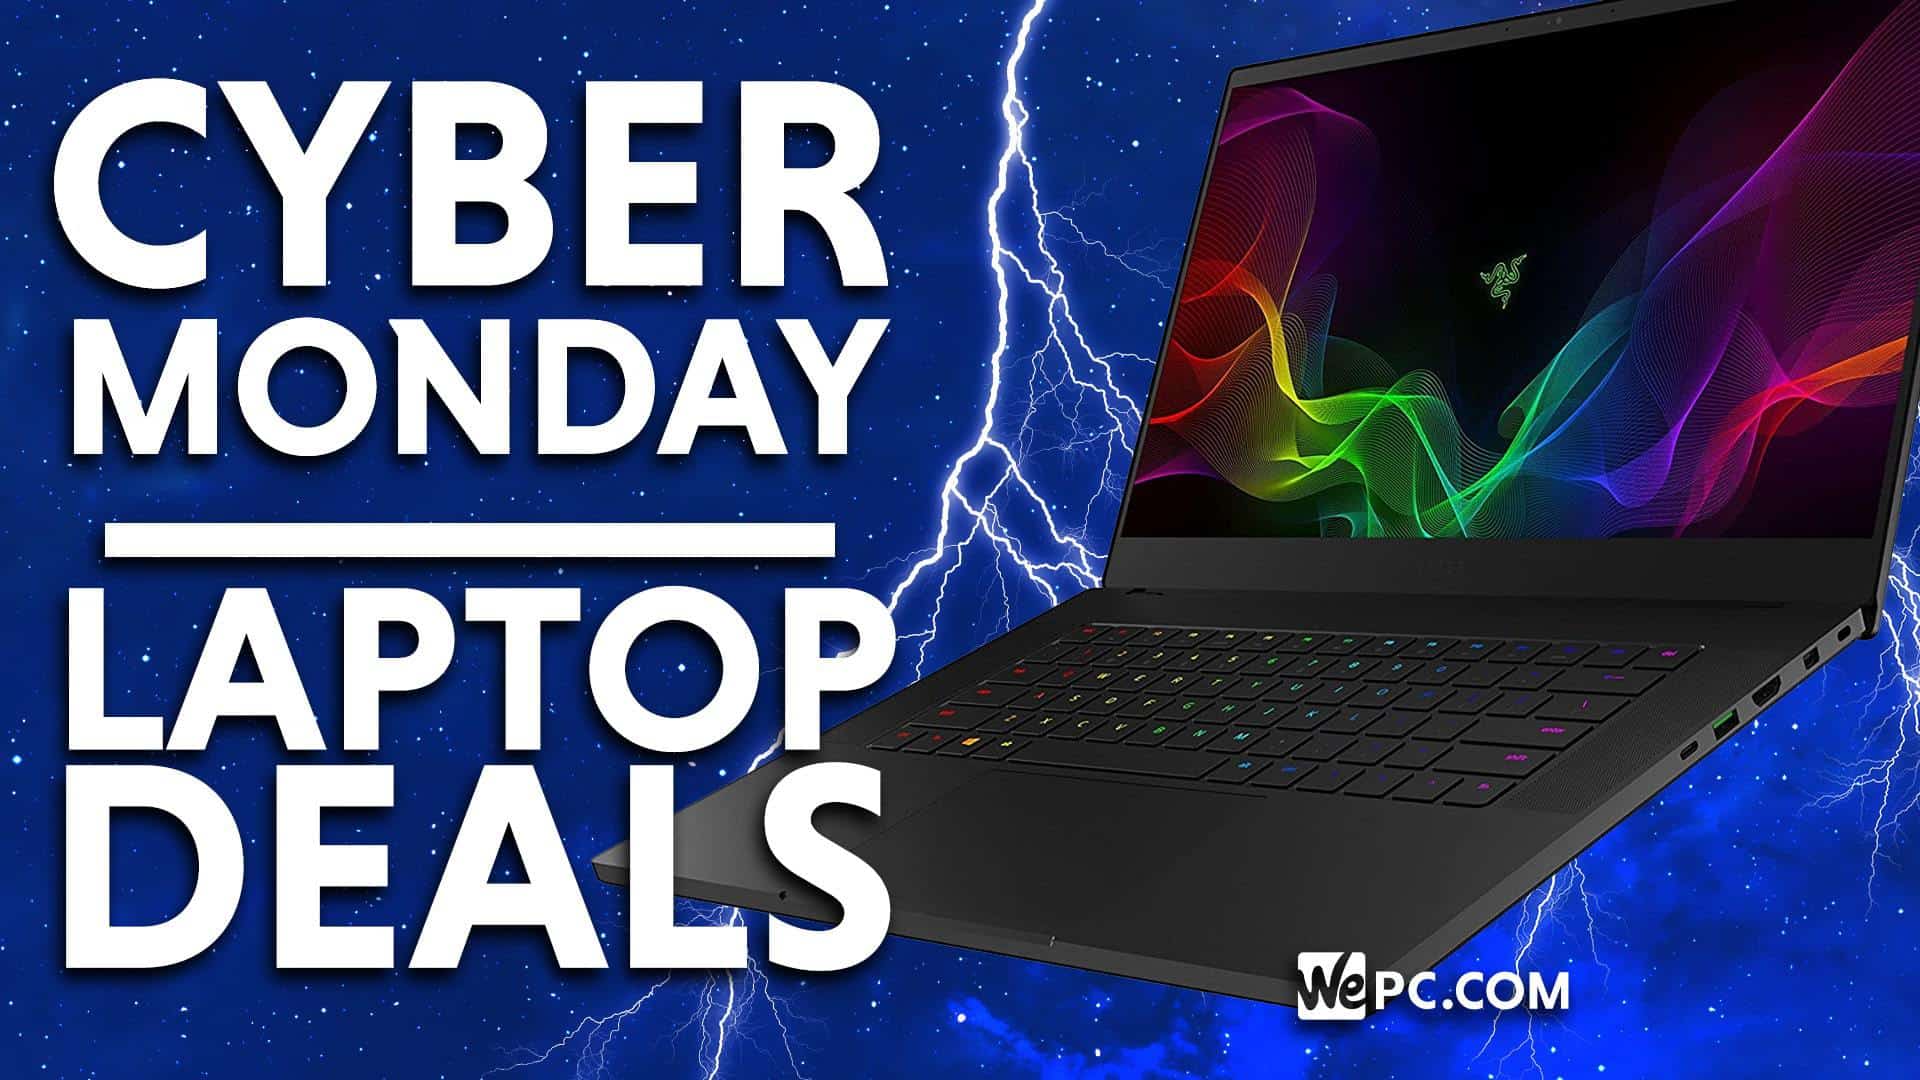 Cyber Monday Laptop Deals 2020 - WePC | Let's build your dream gaming PC